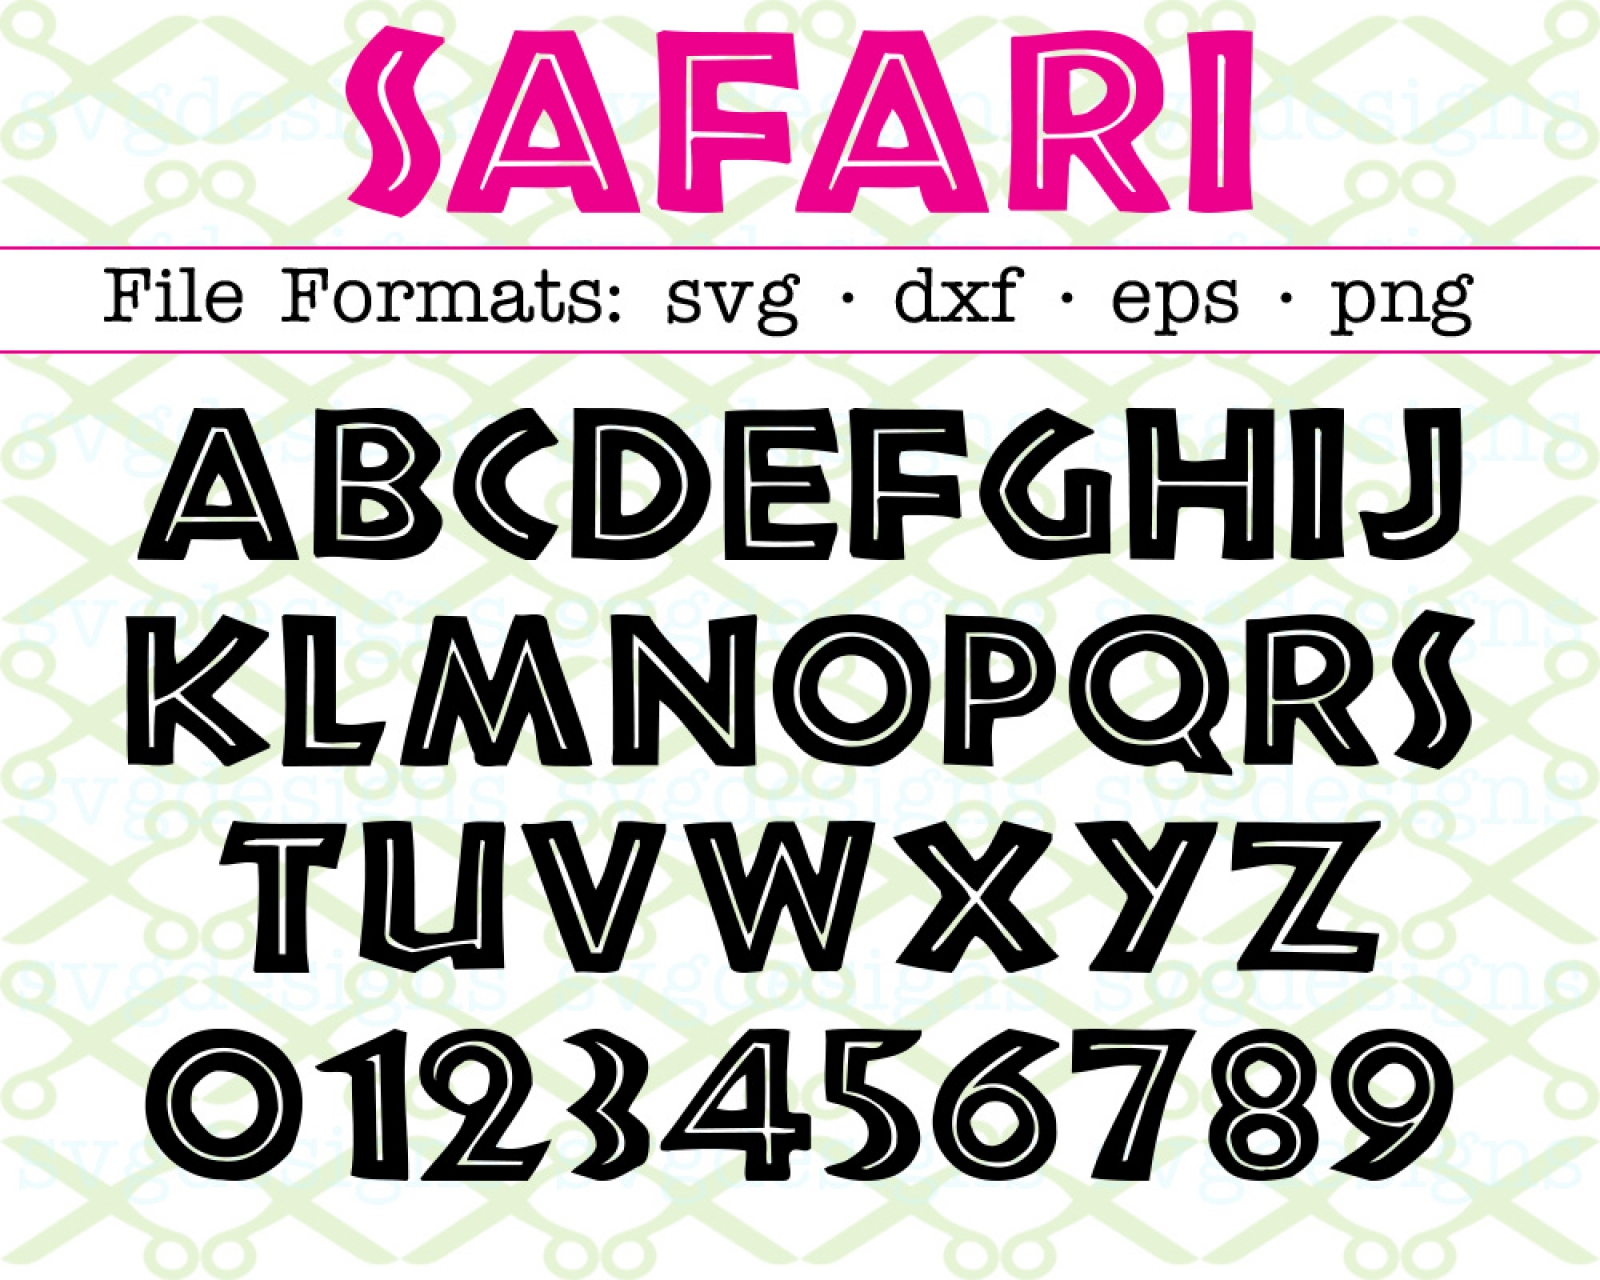 Download SAFARI LETTERS SVG FONT -Cricut & Silhouette Files SVG DXF ...